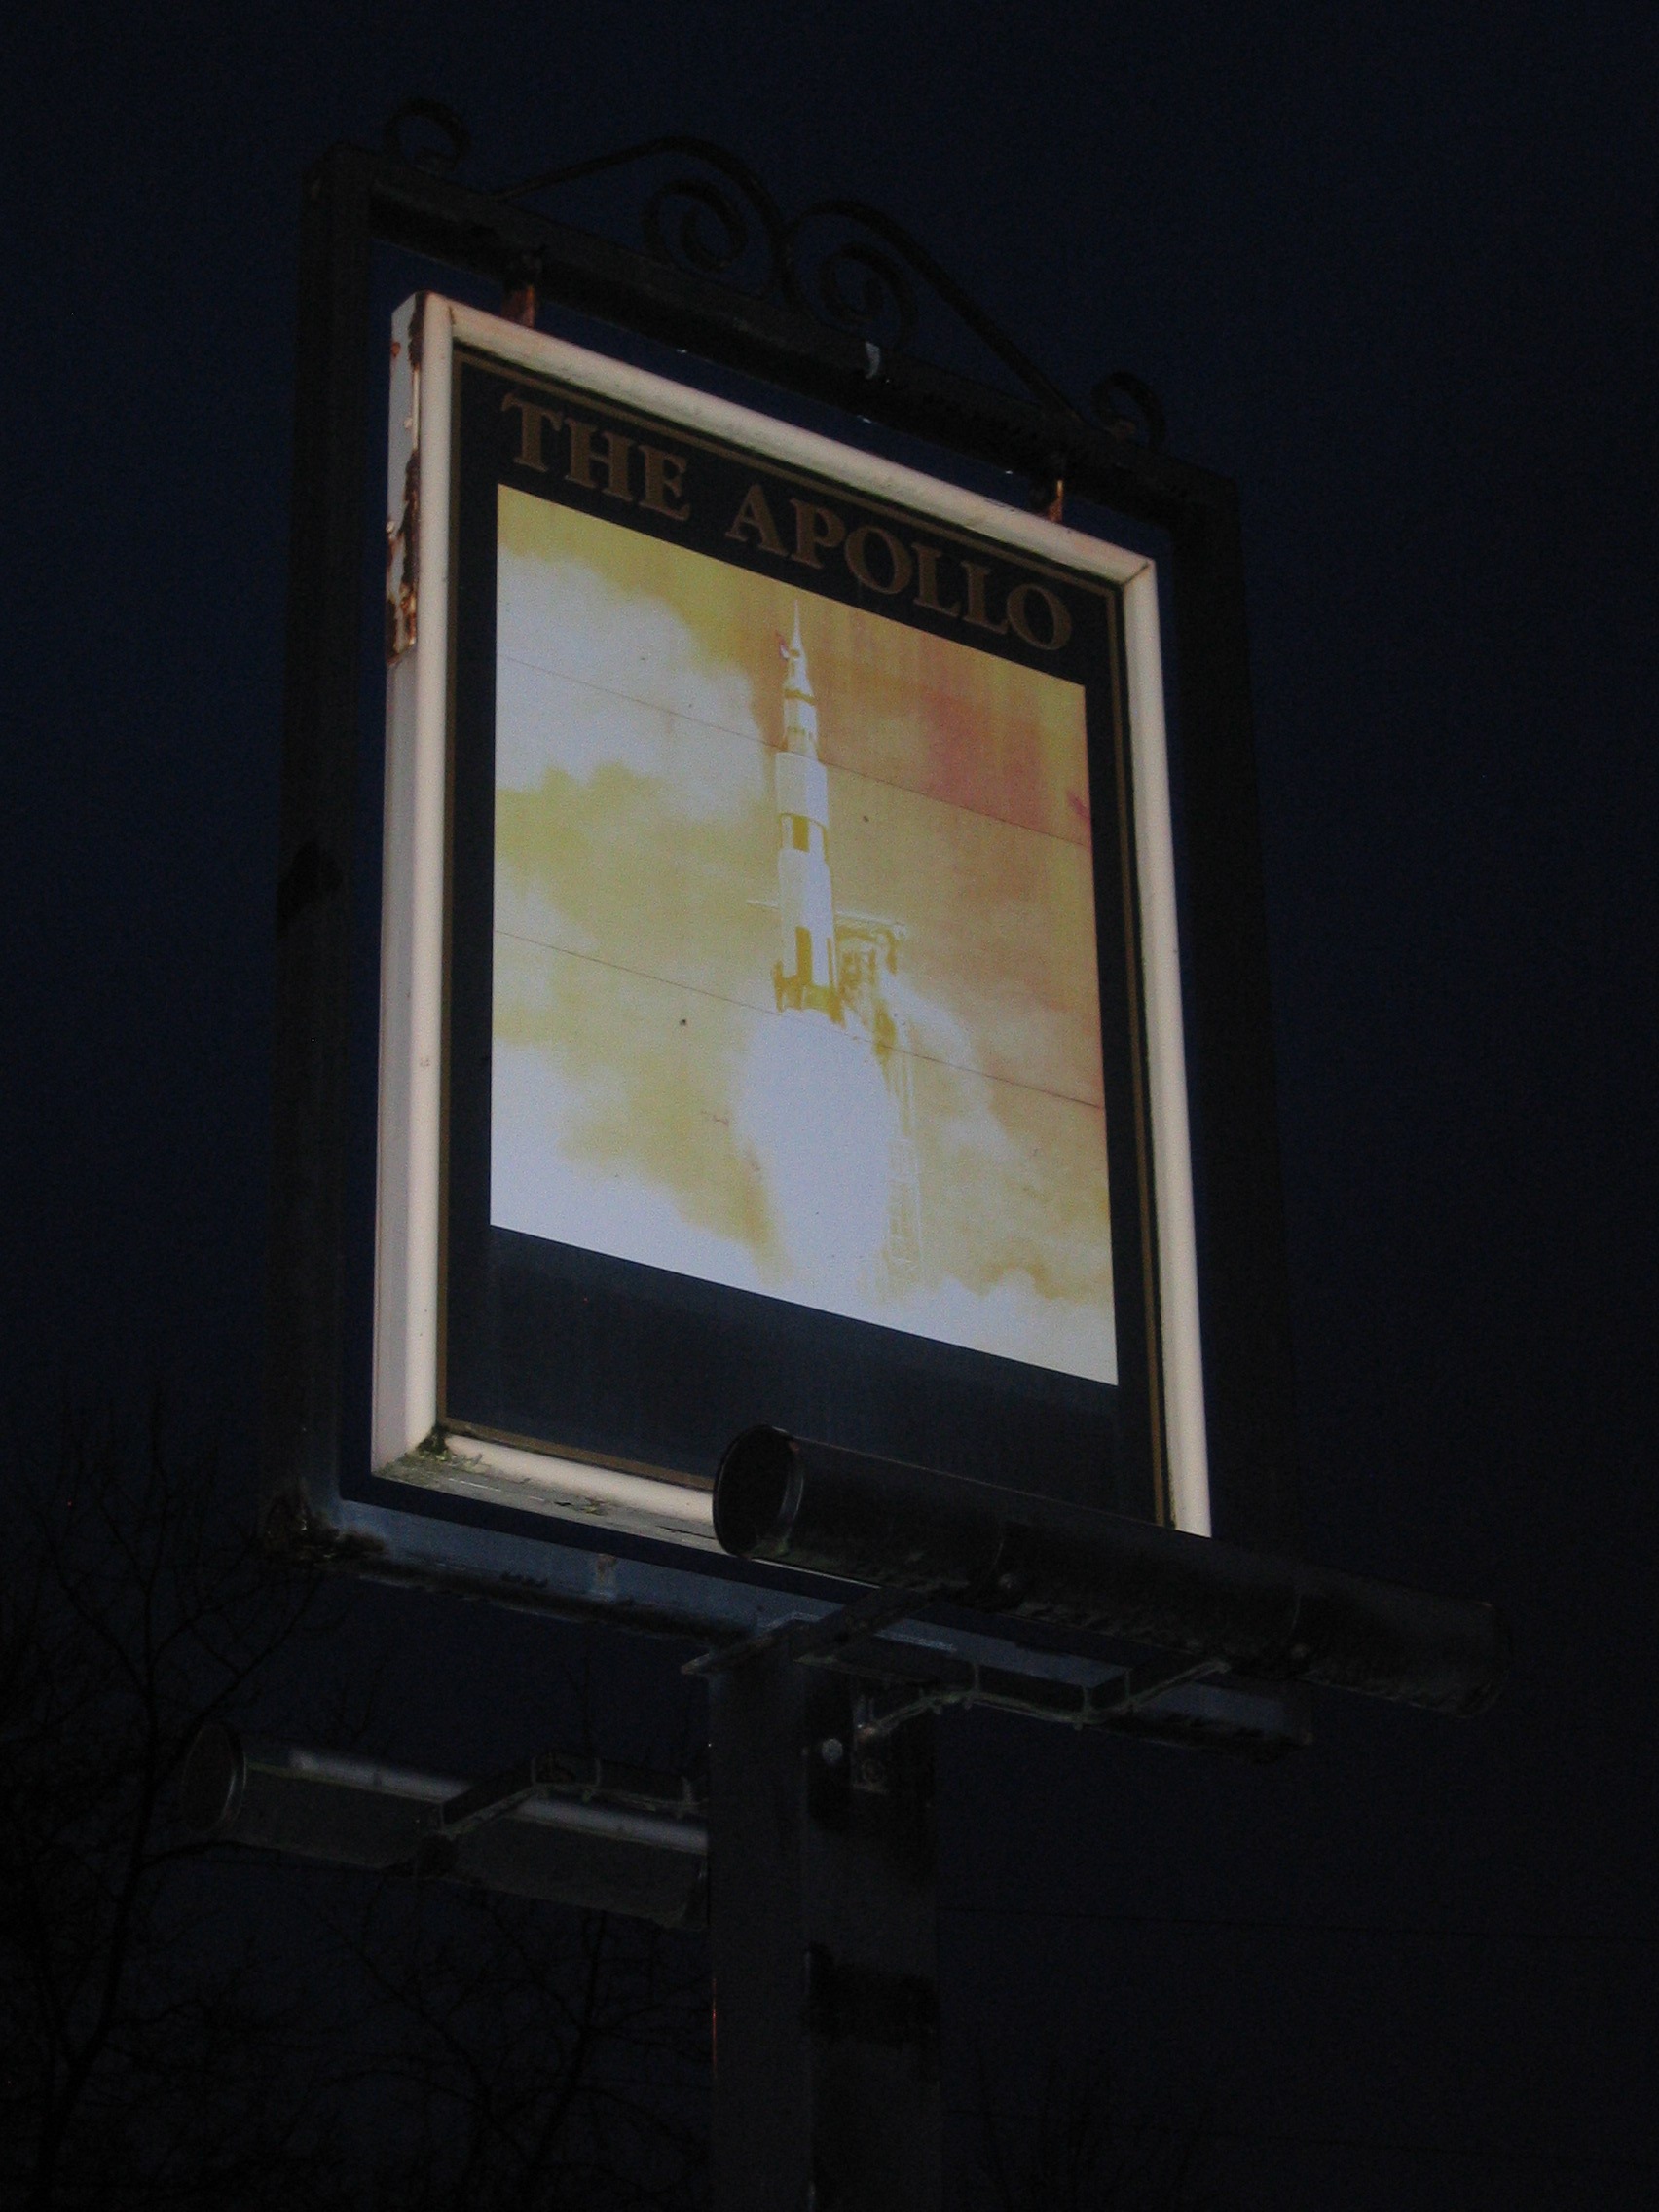 Photo taken by me – pub sign for The Apollo pub, Miles Platting, Manchester